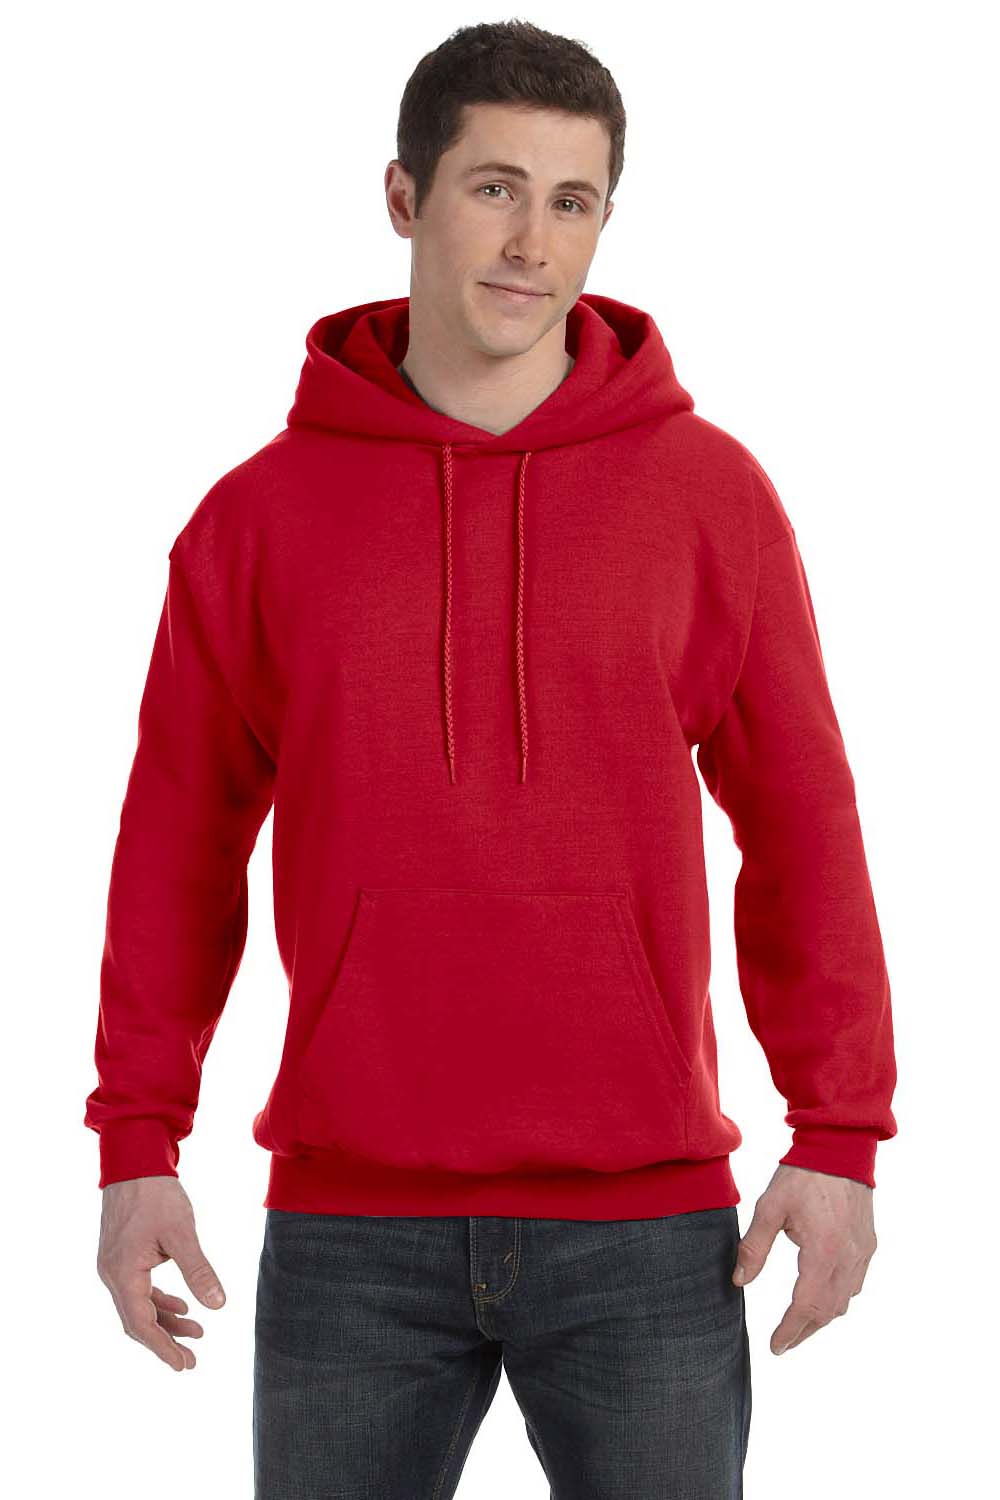 Hanes P170 Mens EcoSmart Print Pro XP Hooded Sweatshirt Hoodie Red Front